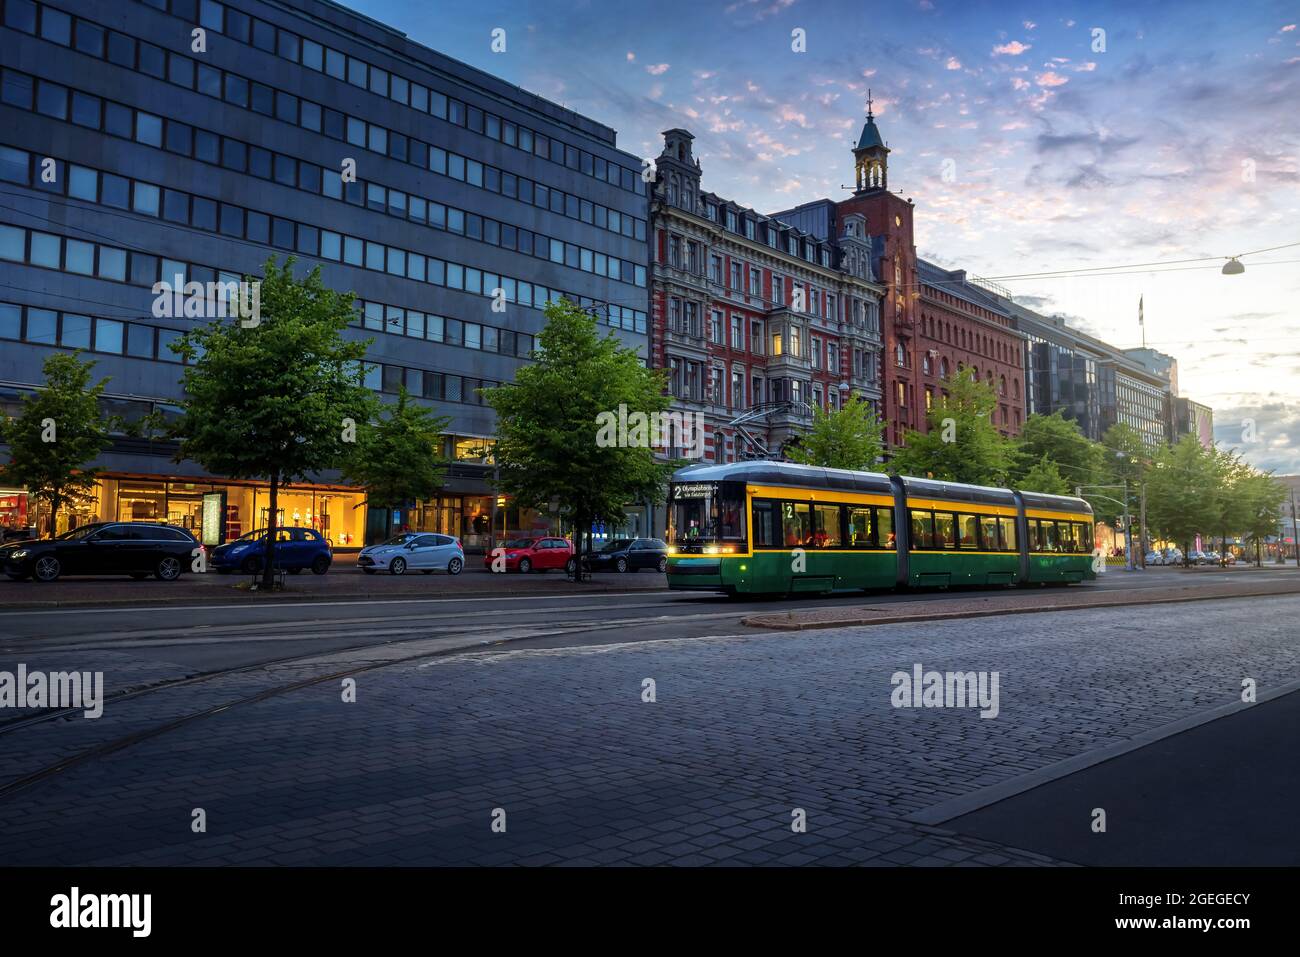 City Tram in Mannerheimintie Street at sunset - Helsinki main street at city centre - Helsinki, Finland Stock Photo